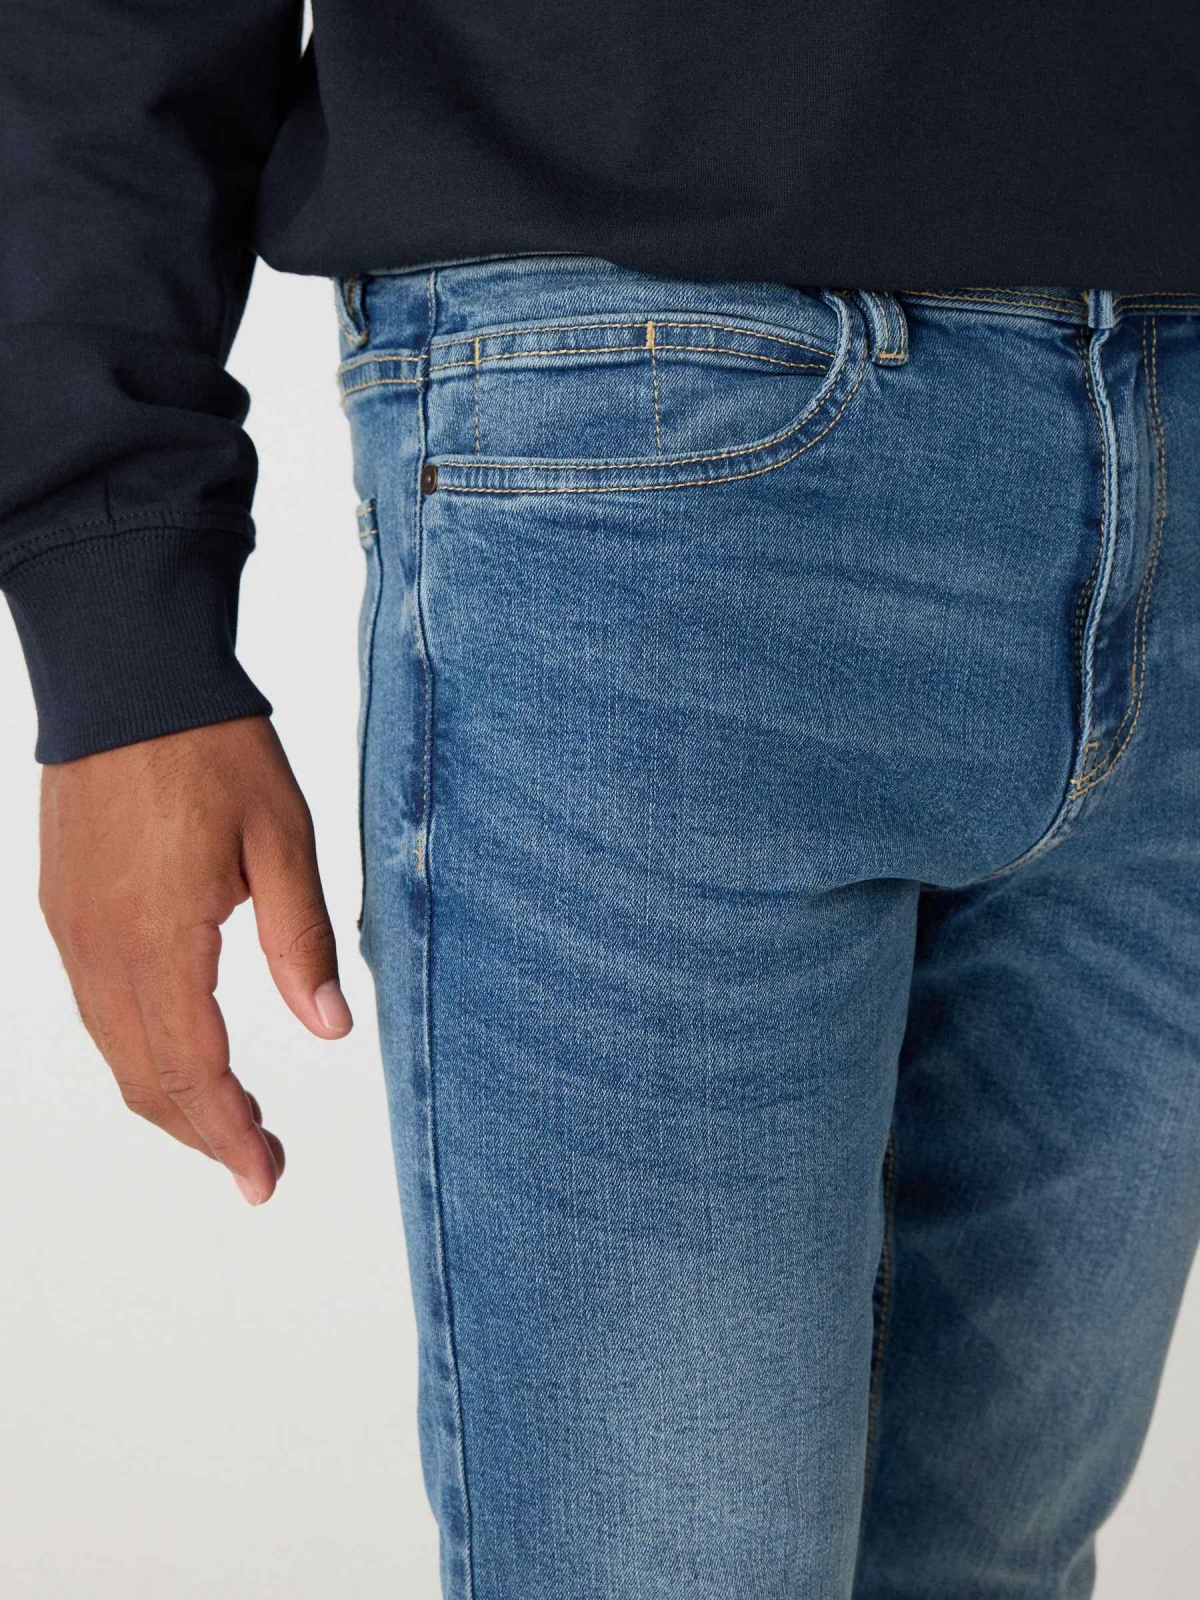 Worn skinny jeans blue detail view